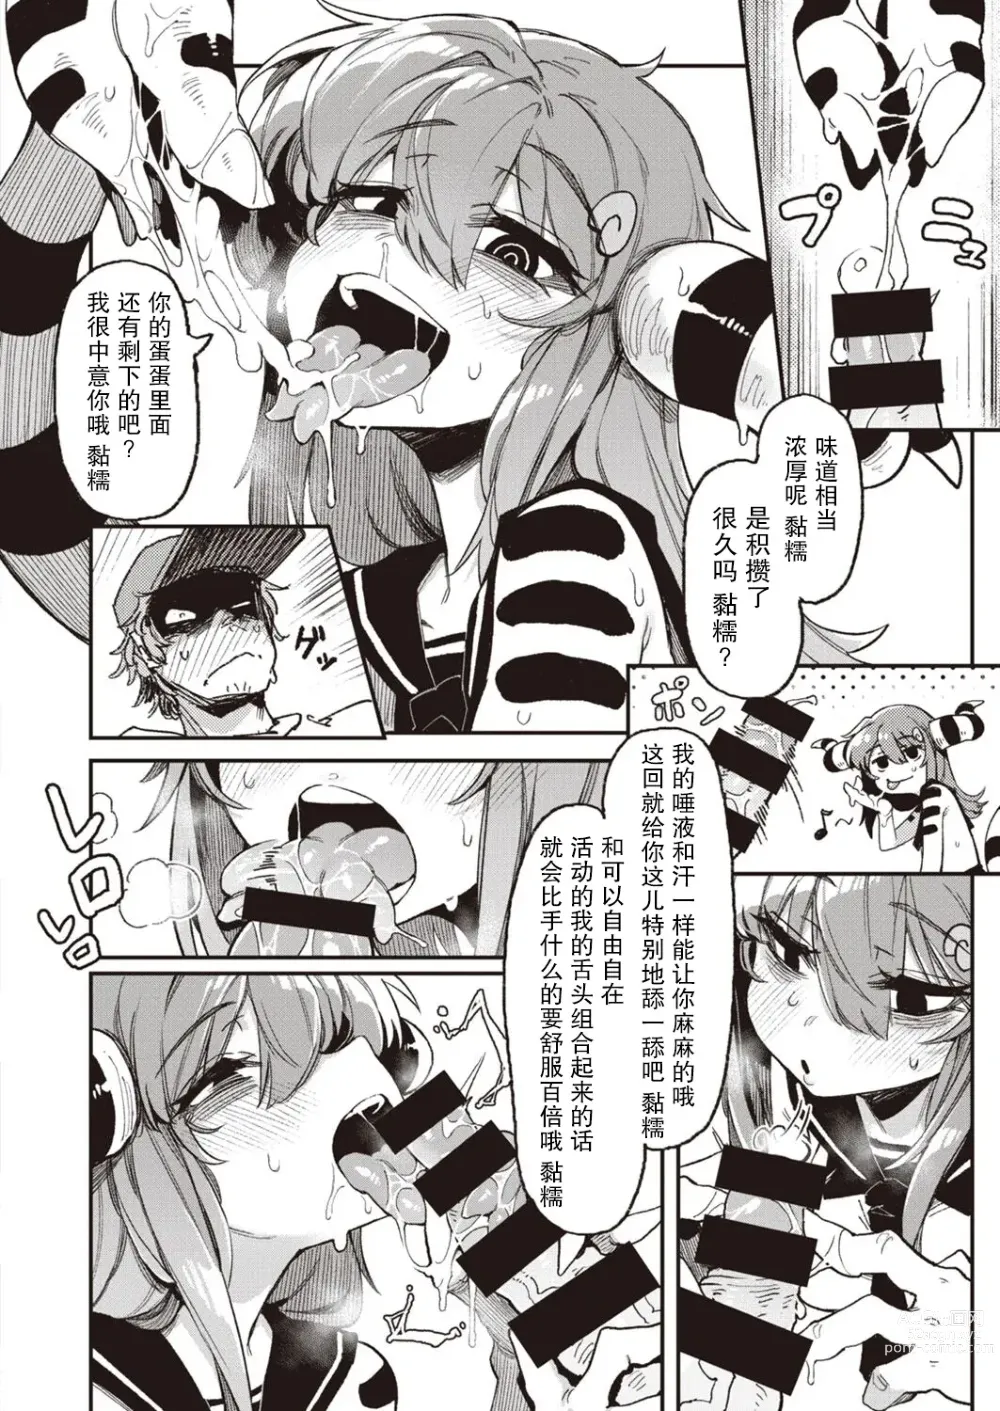 Page 34 of manga Inogami